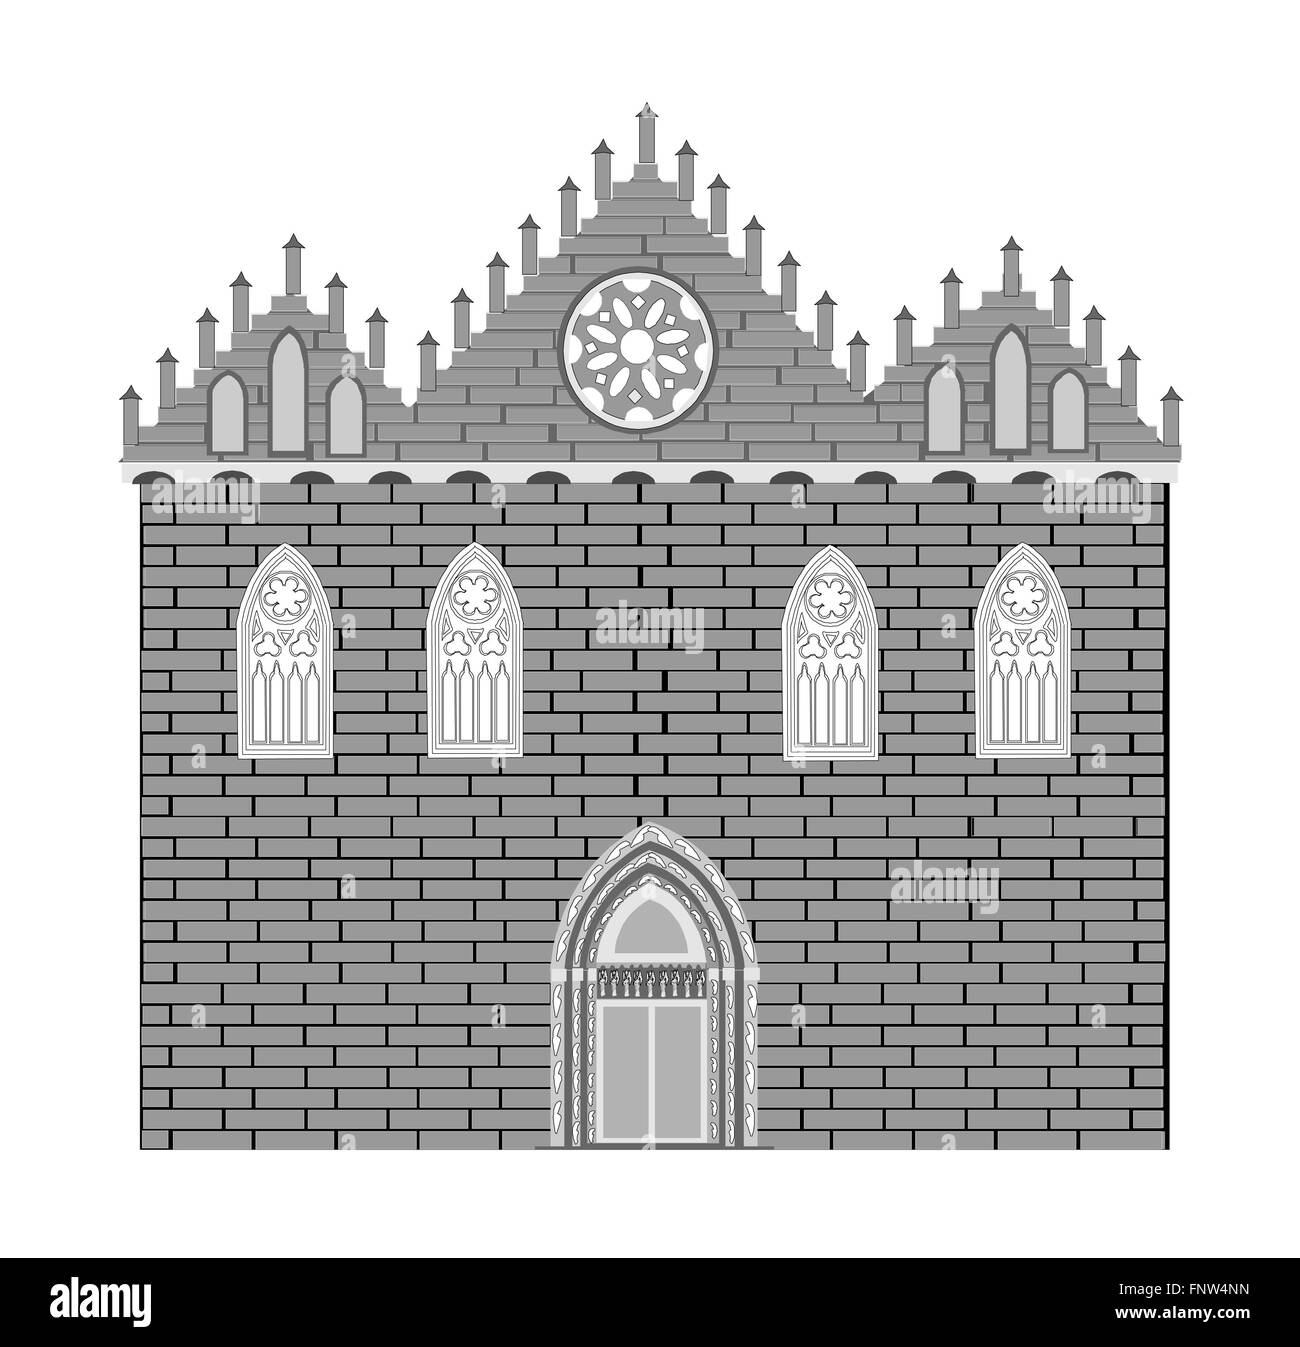 Gothic style architecture Stock Photo